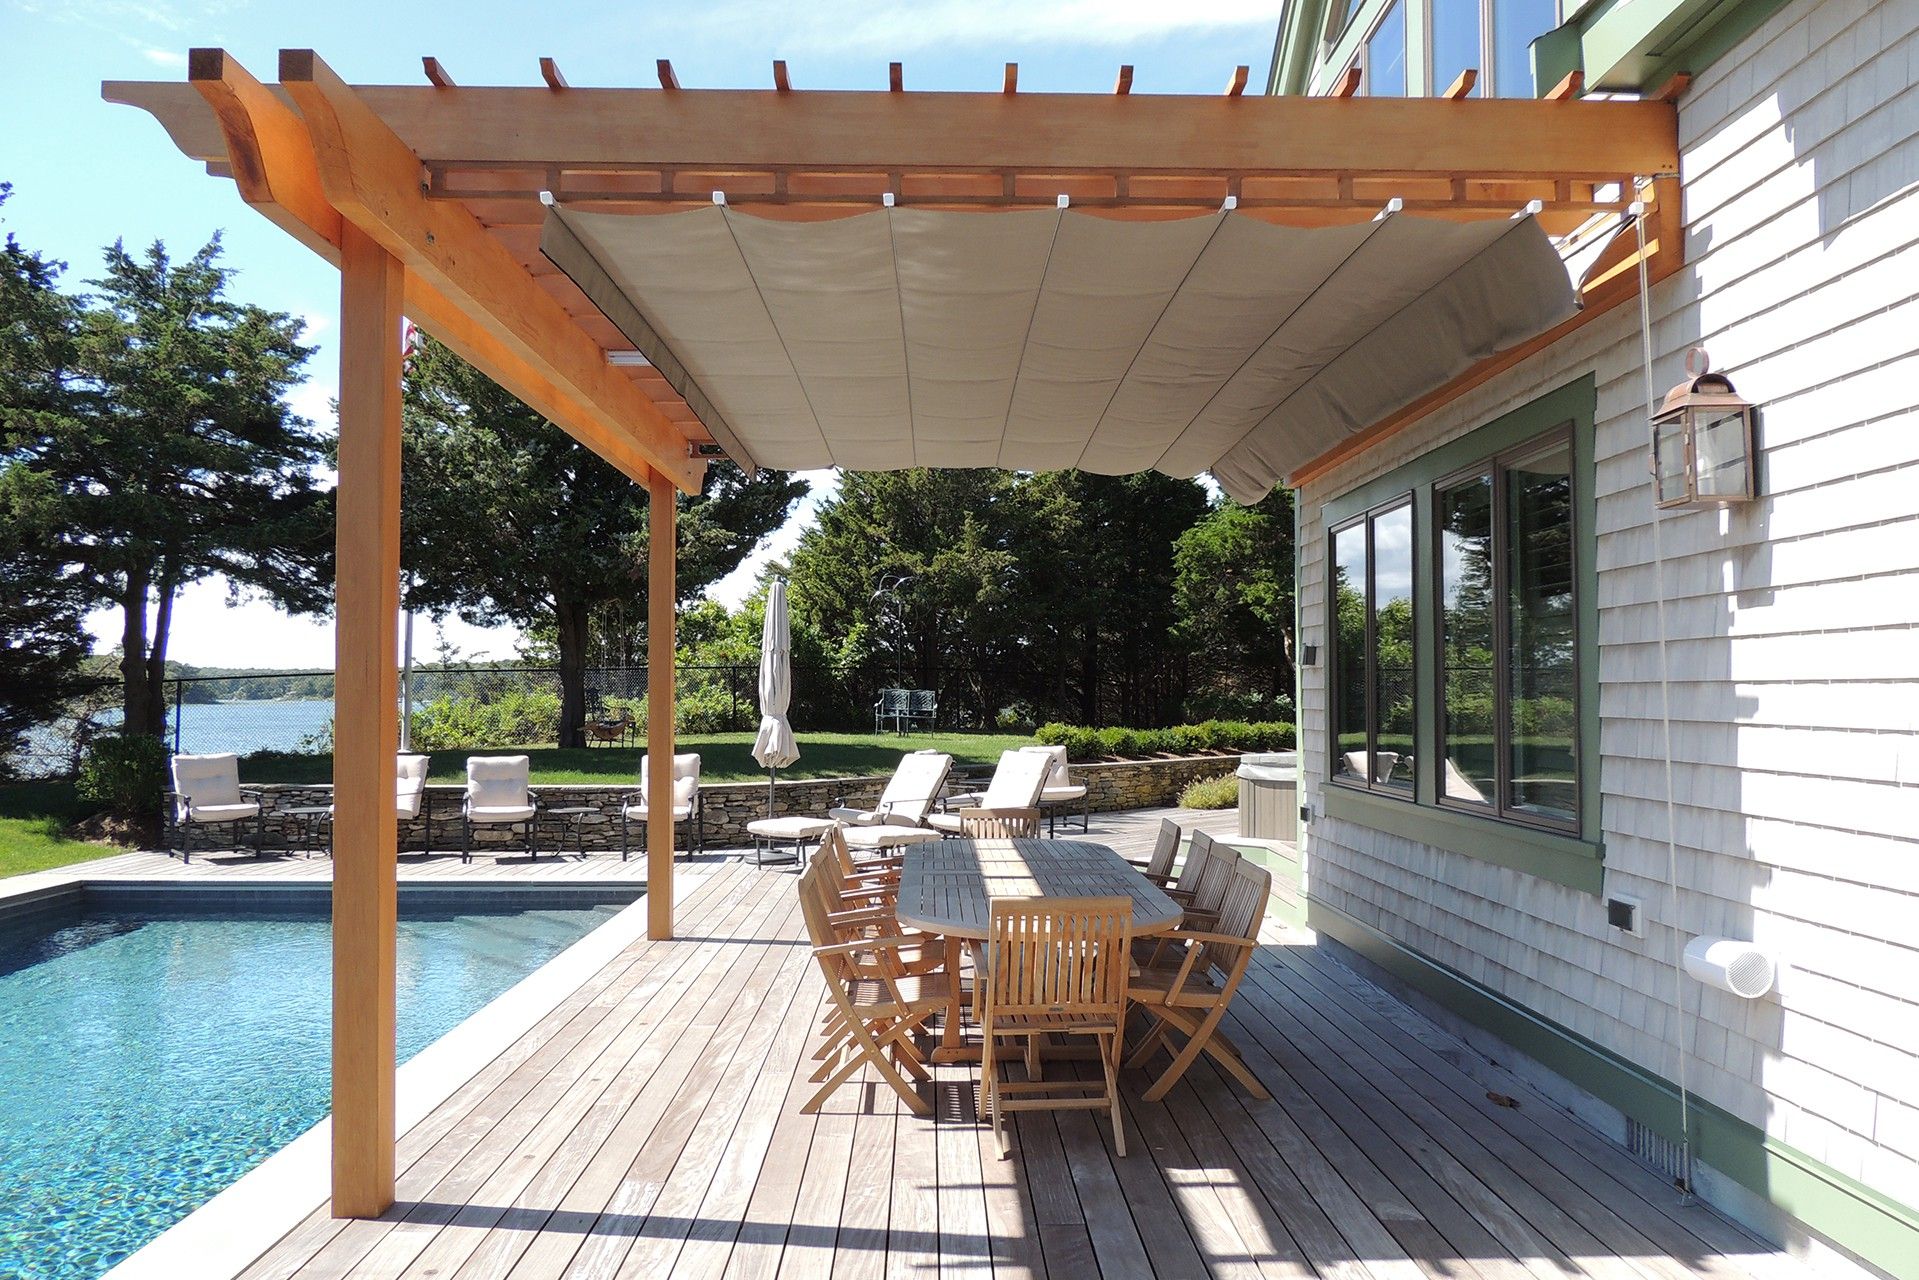 Maximize Outdoor Comfort: The Versatility of Retractable Canopies